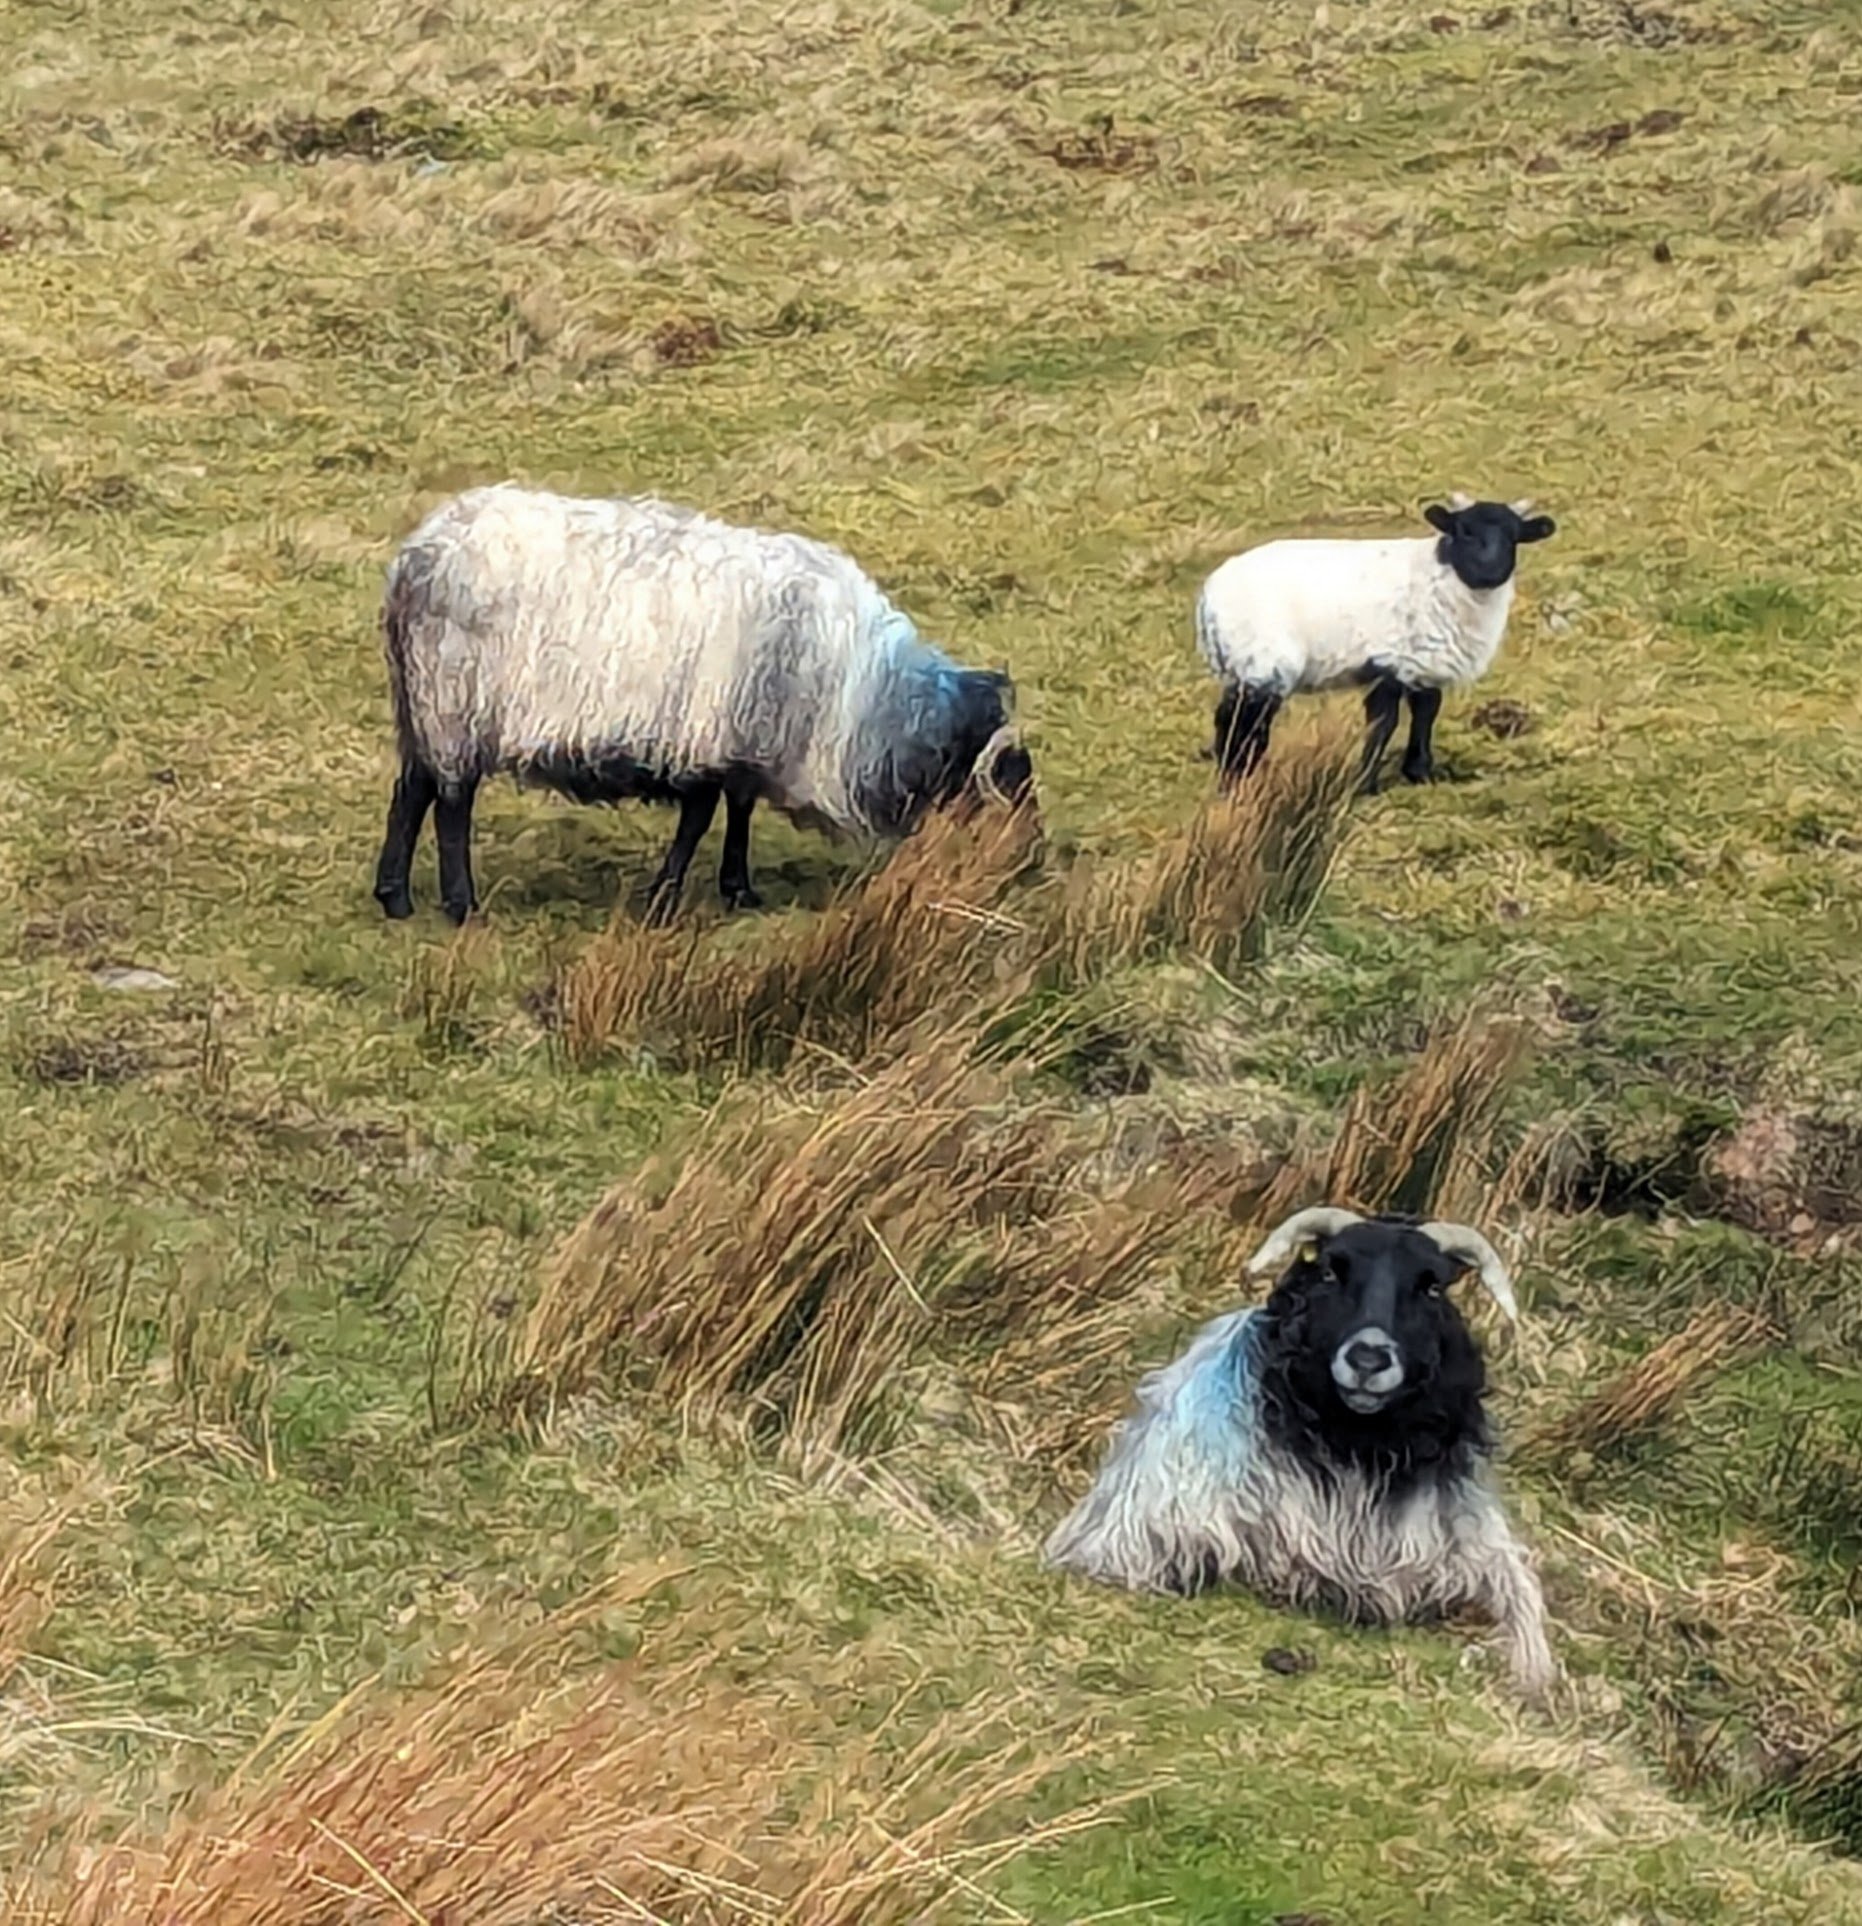 Little Roads Europe Ireland countryside sheep.jpg